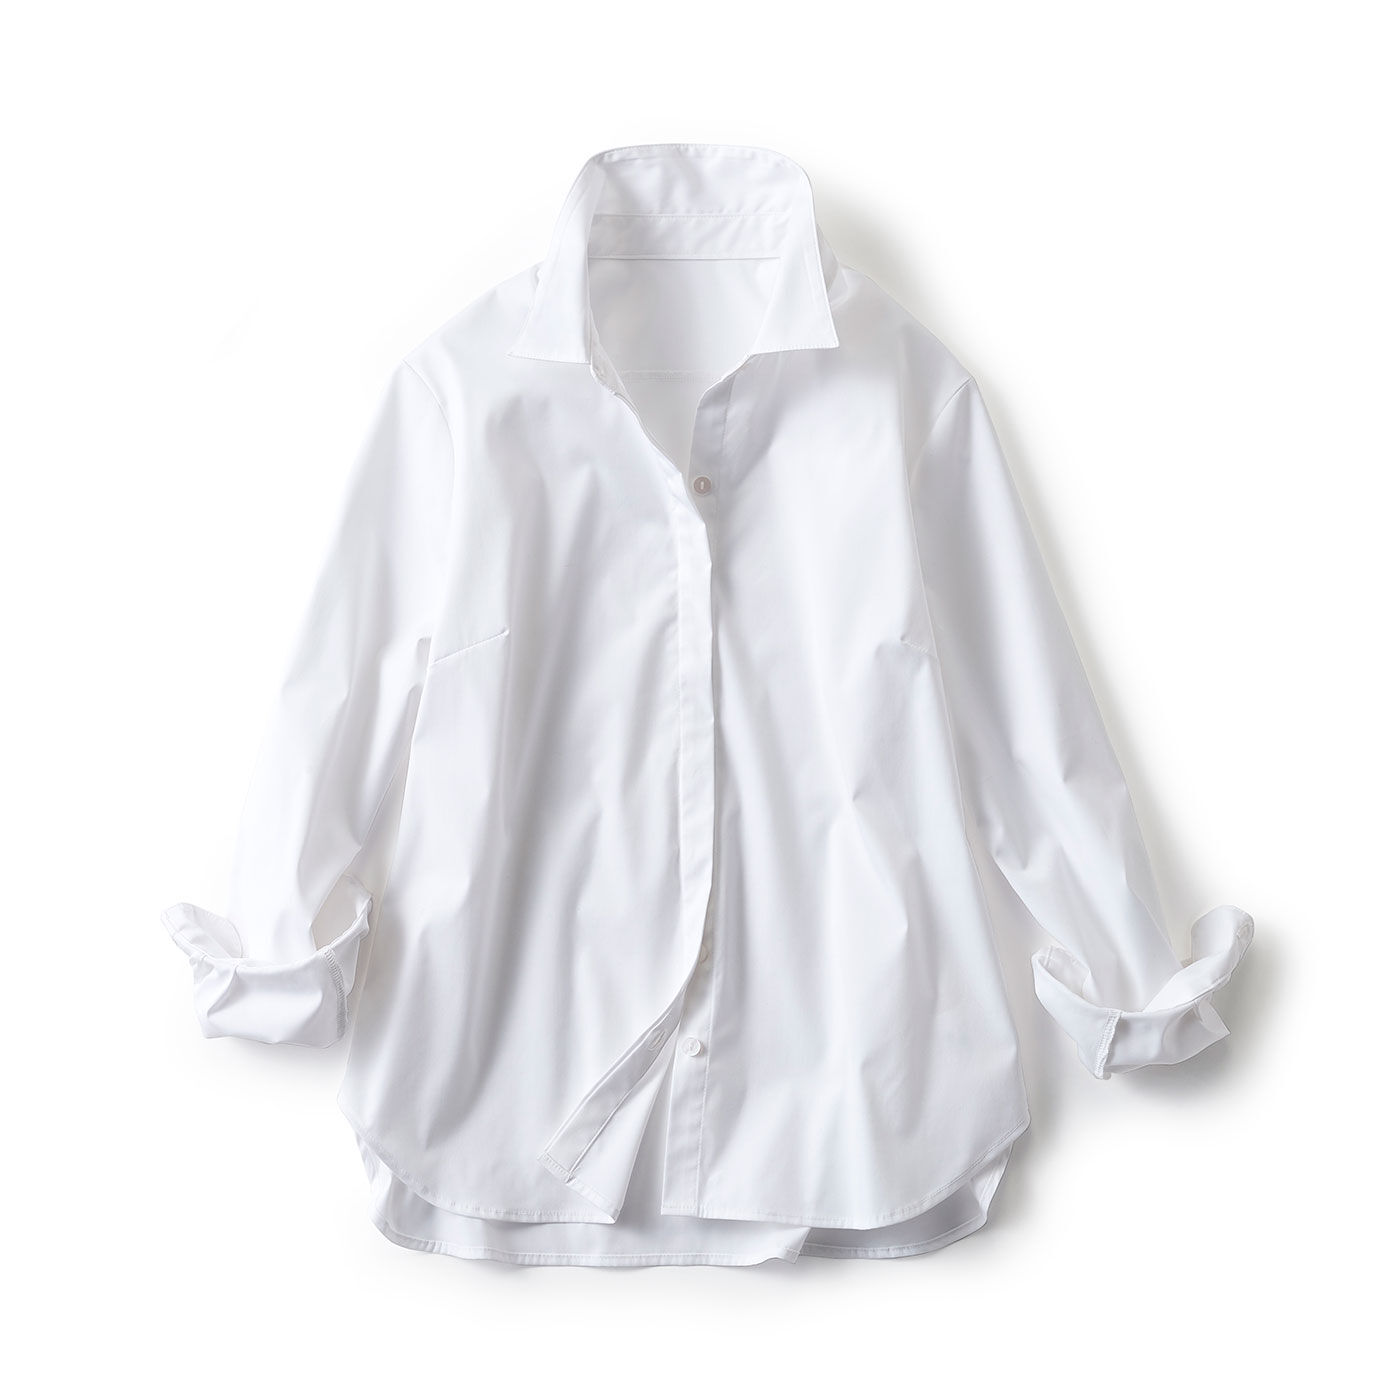 FelissimoLX|LX　大人女性の今が輝く　理想の白シャツ|袖をロールアップしたり少しラフに着用しカジュアルにも着こなせる逸品です。